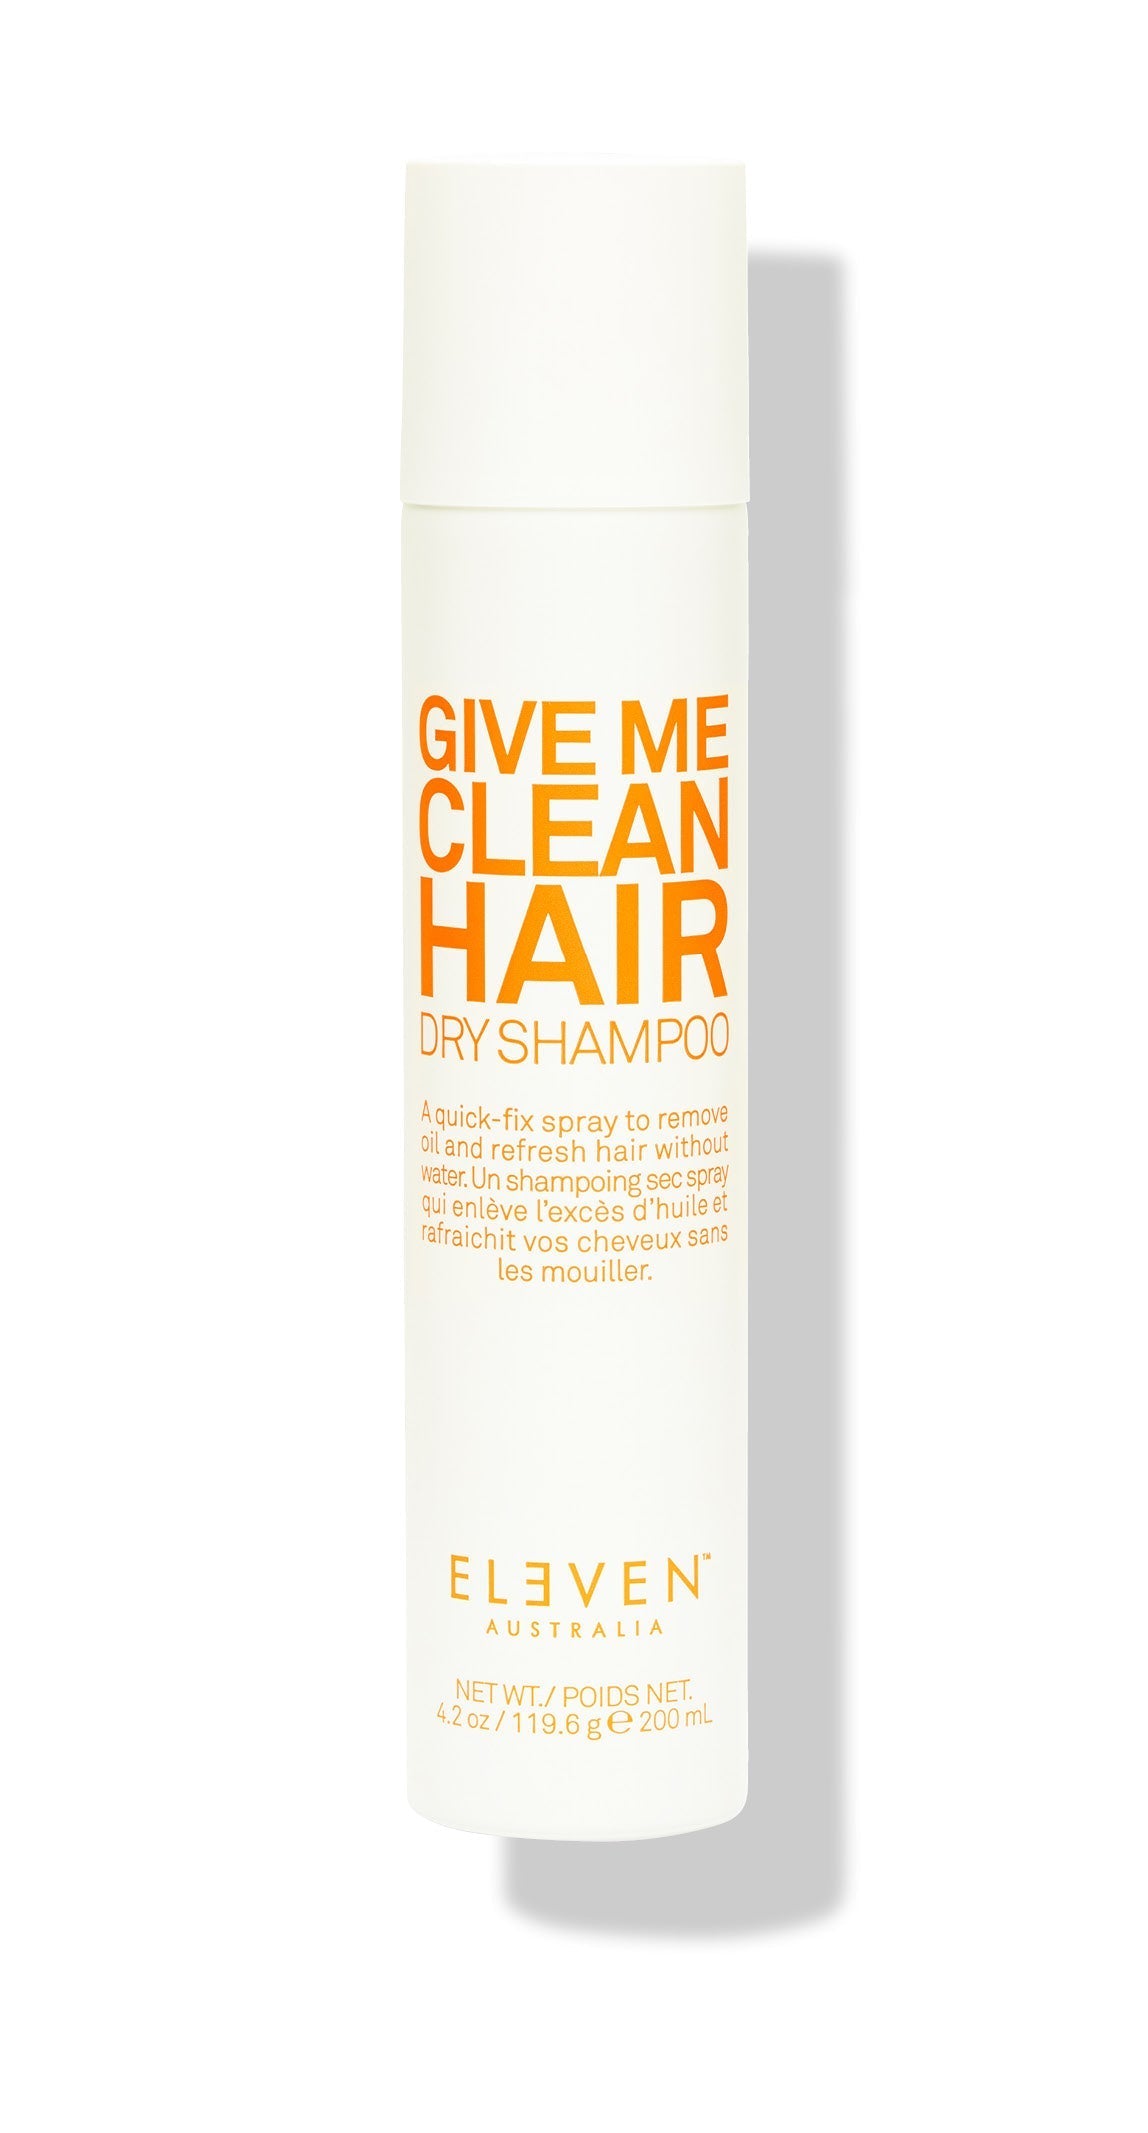 Give Me Clean Hair Dry Shampoo - 130g - ELEVEN Australia